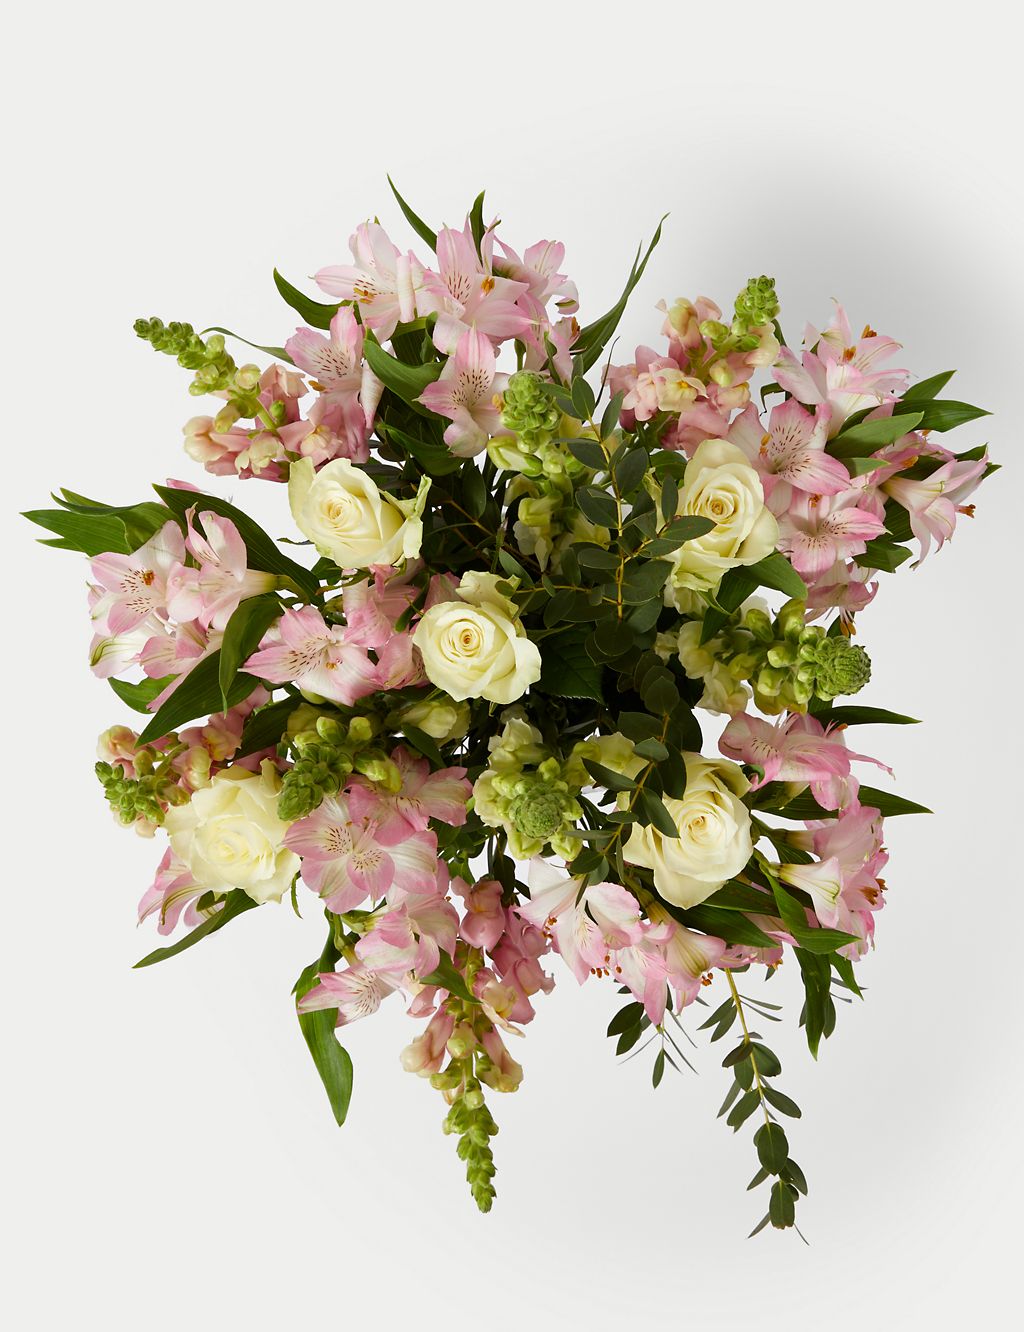 Lovely Mum Rose & Antirrhinum Bouquet With Rosé Prosecco 1 of 6